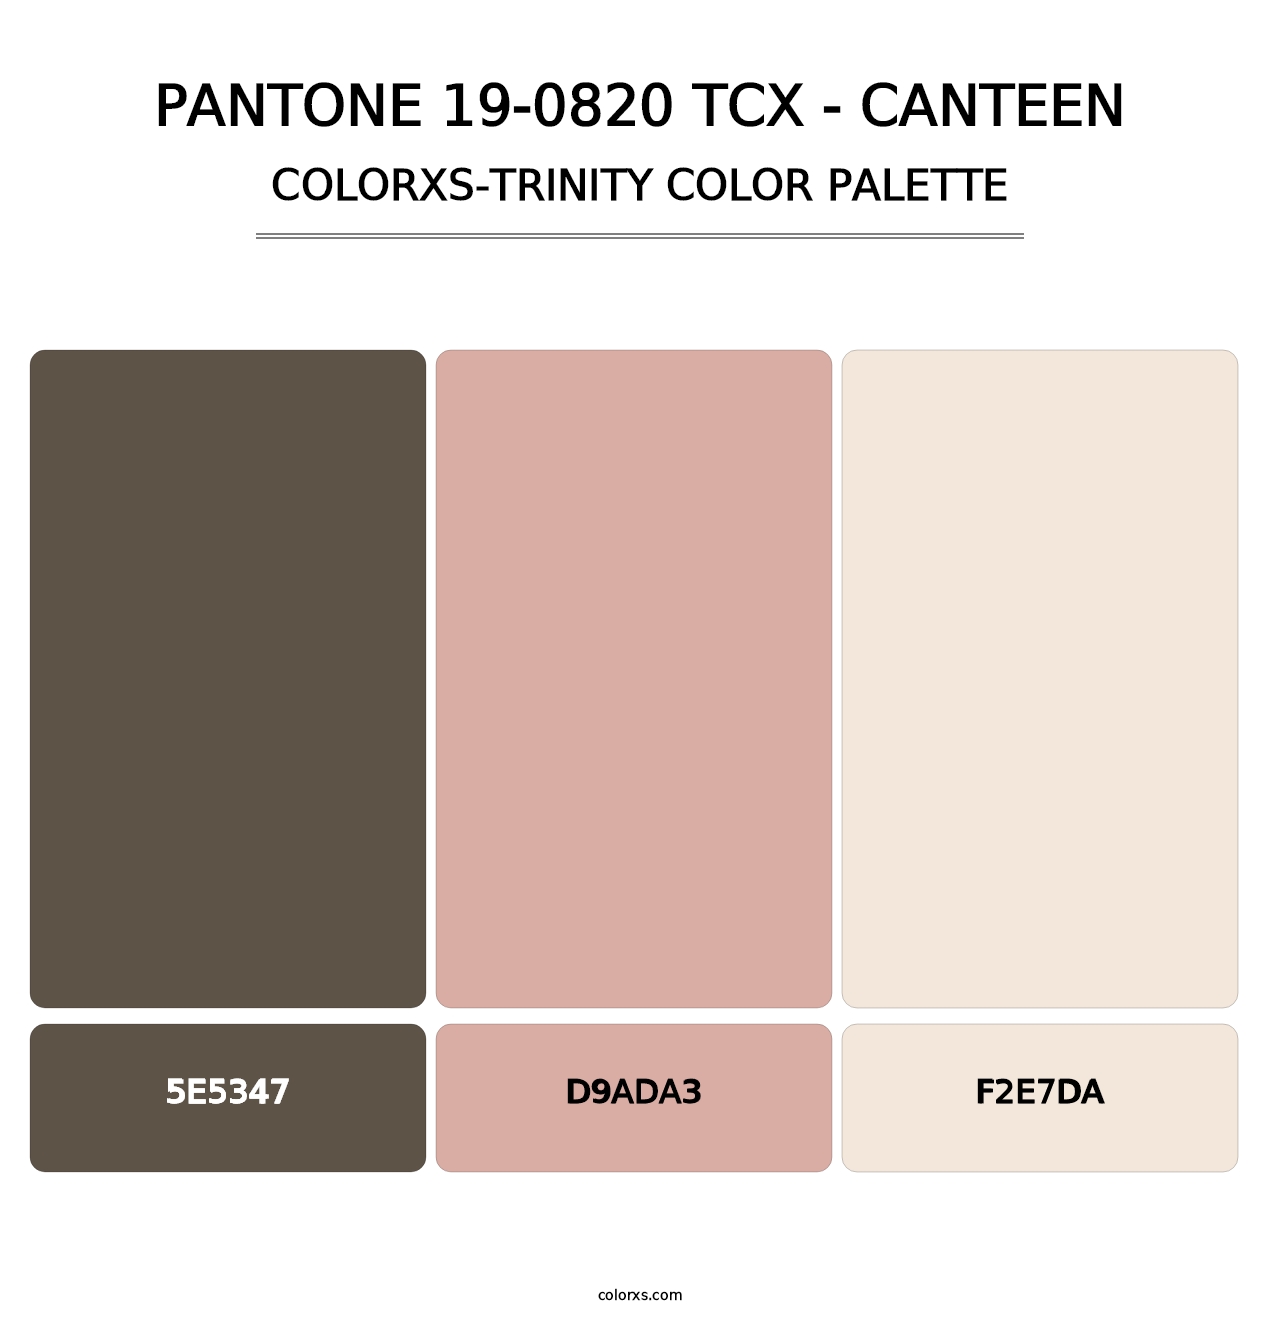 PANTONE 19-0820 TCX - Canteen - Colorxs Trinity Palette